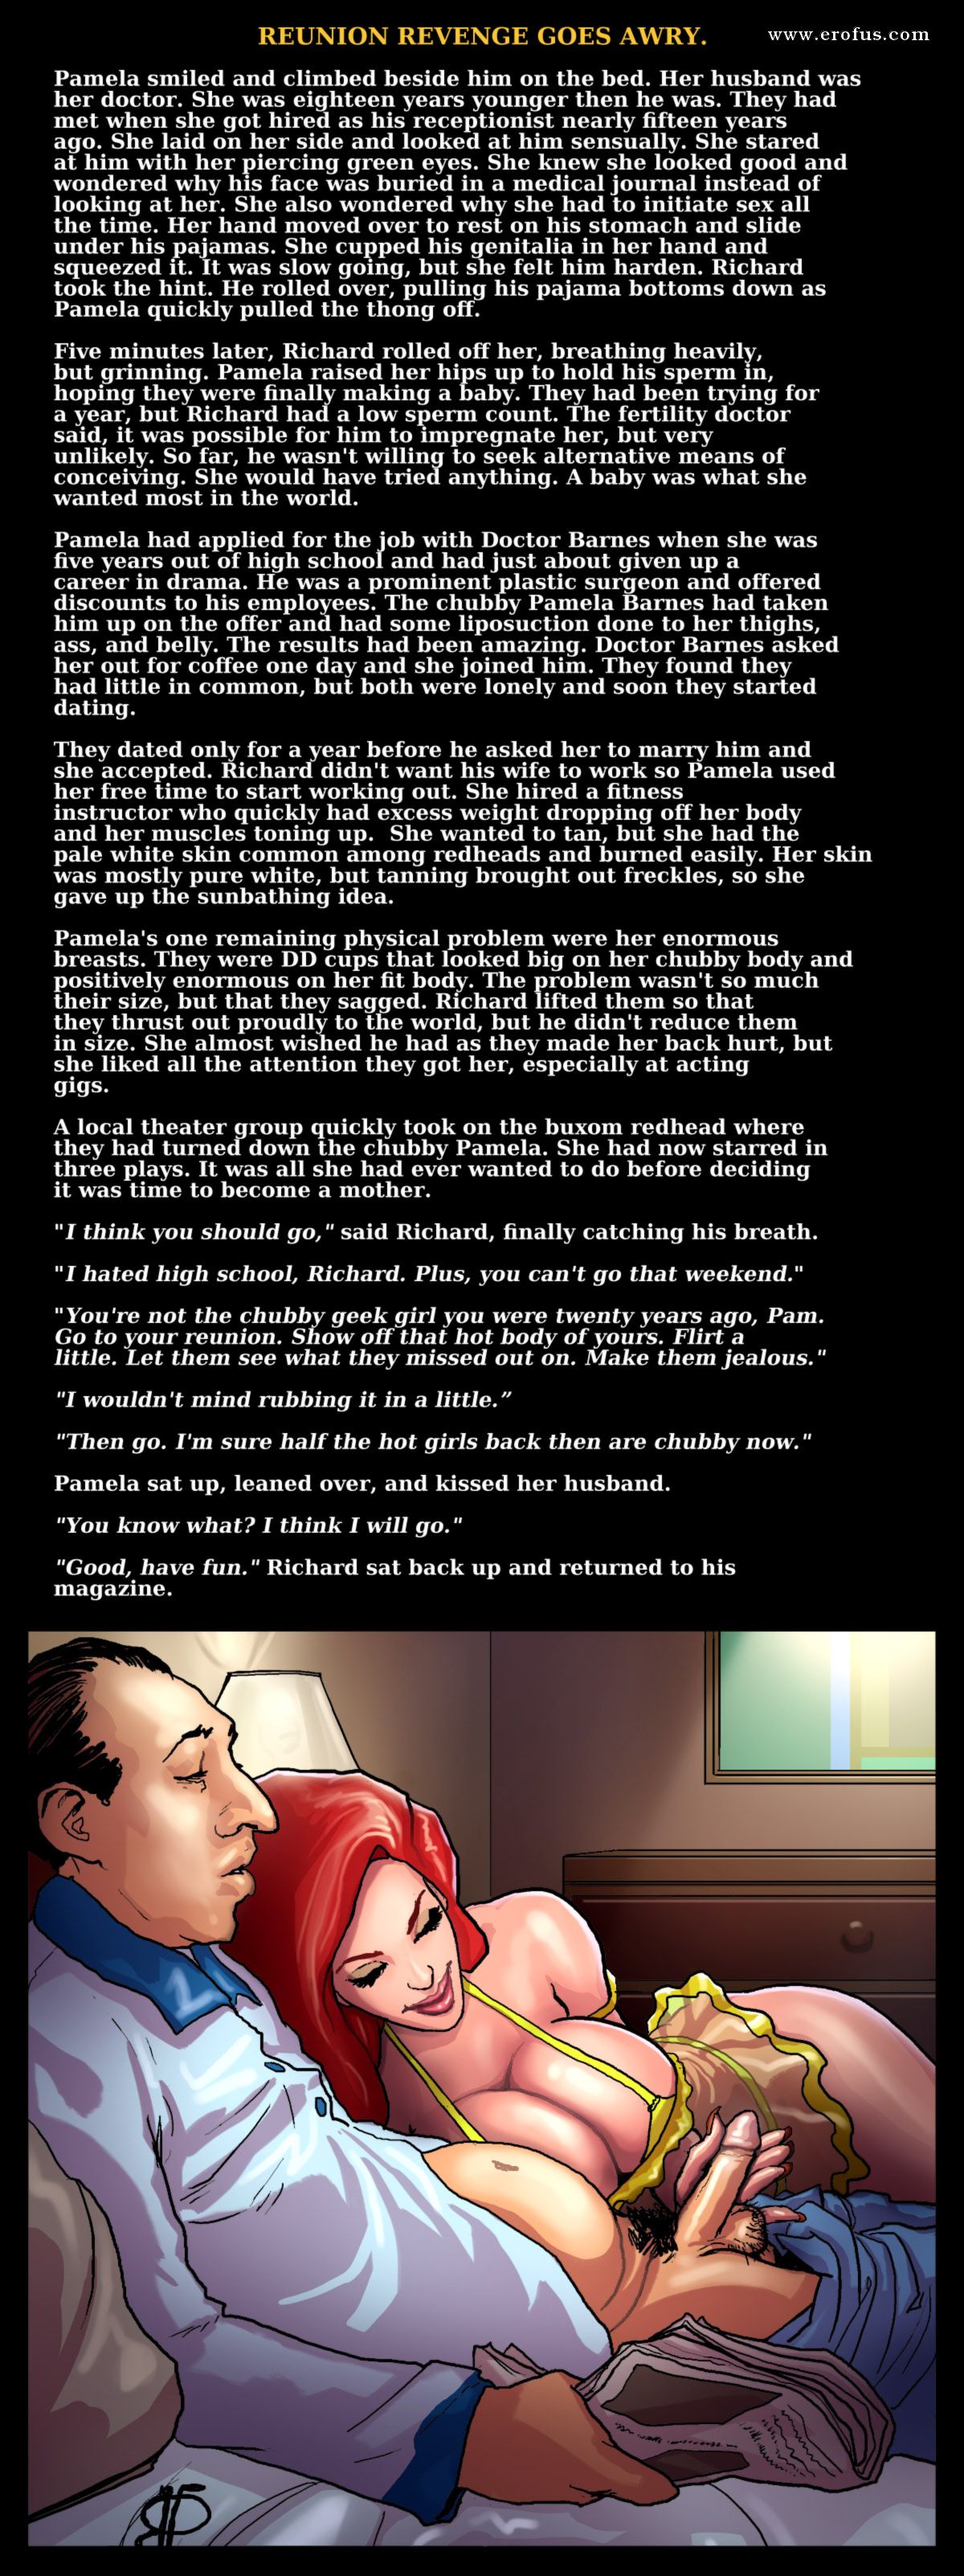 Page 3 blacknwhitecomics_com-comix/illustrated-stories/reunion-revenge-goes-awry Erofus pic picture